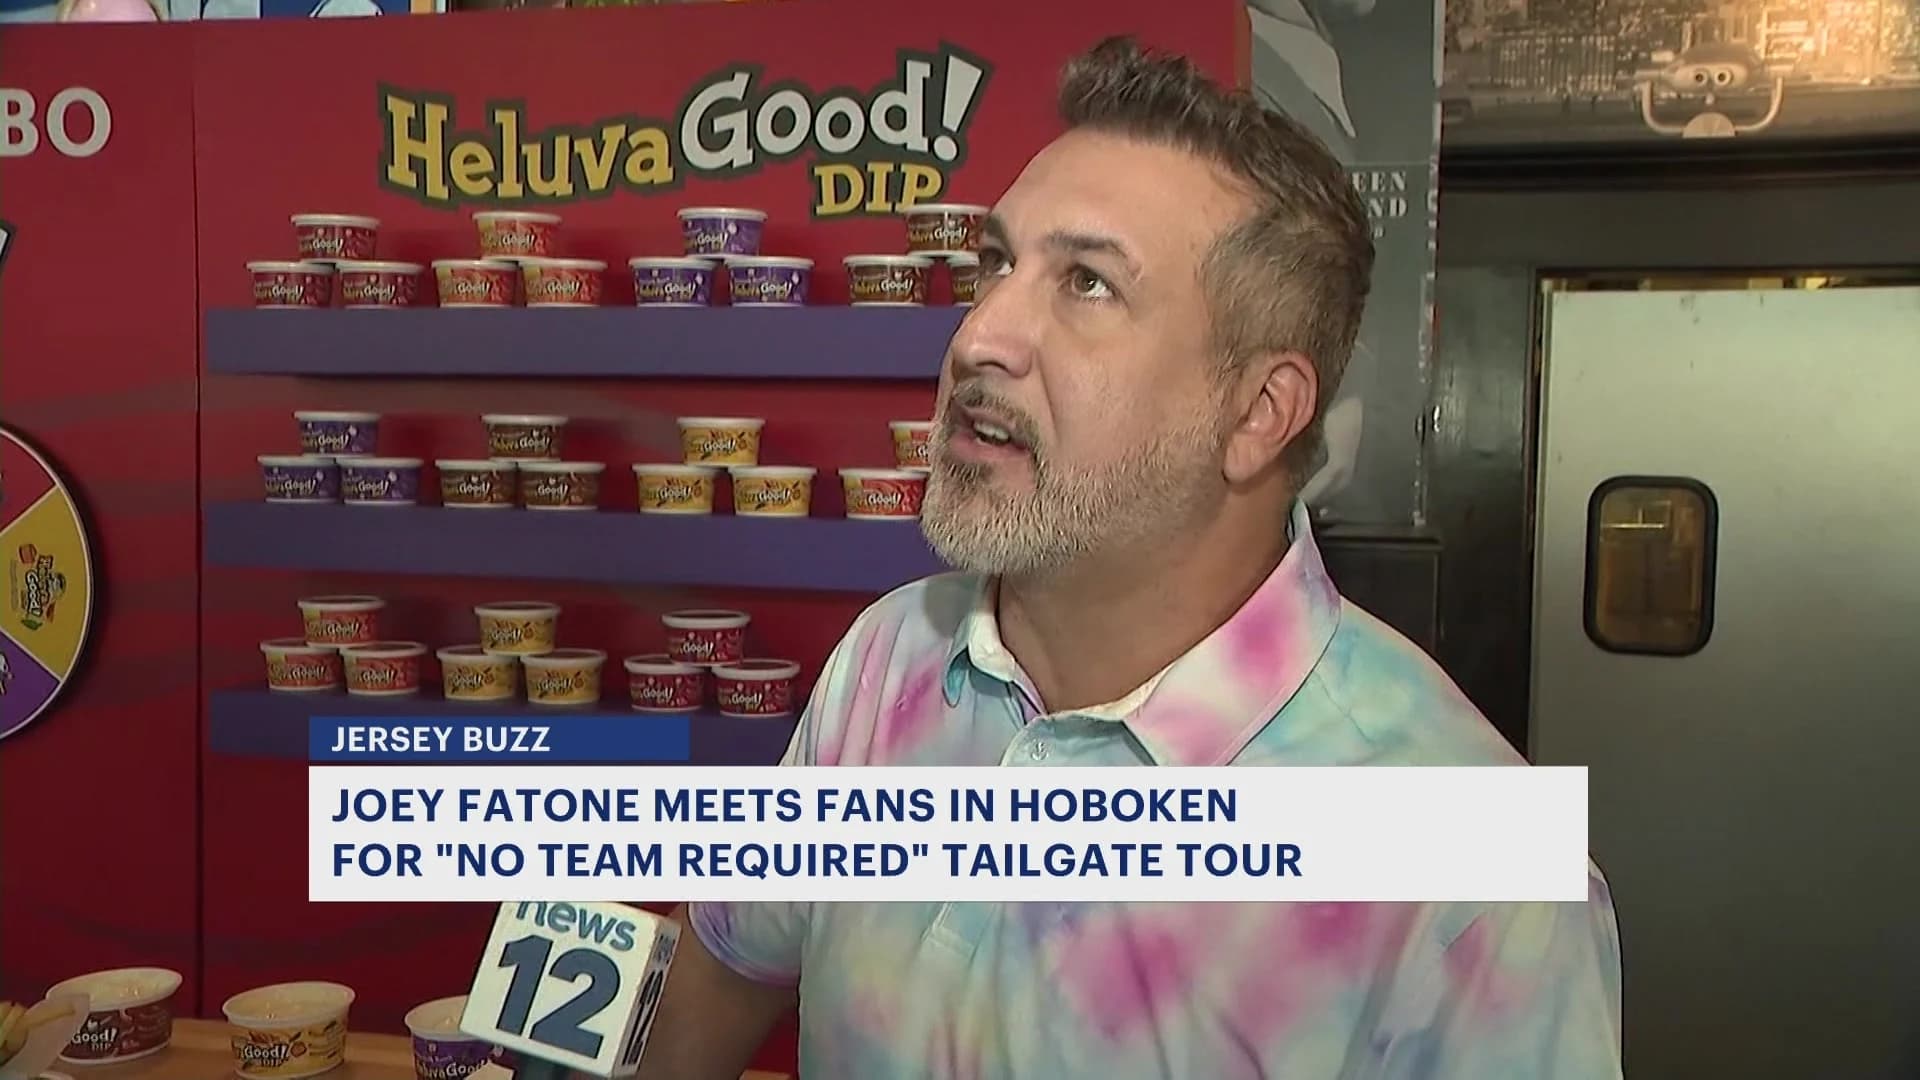 Jersey Buzz: NSYNC's Joey Fatone meets fans in Hoboken for tailgate tour